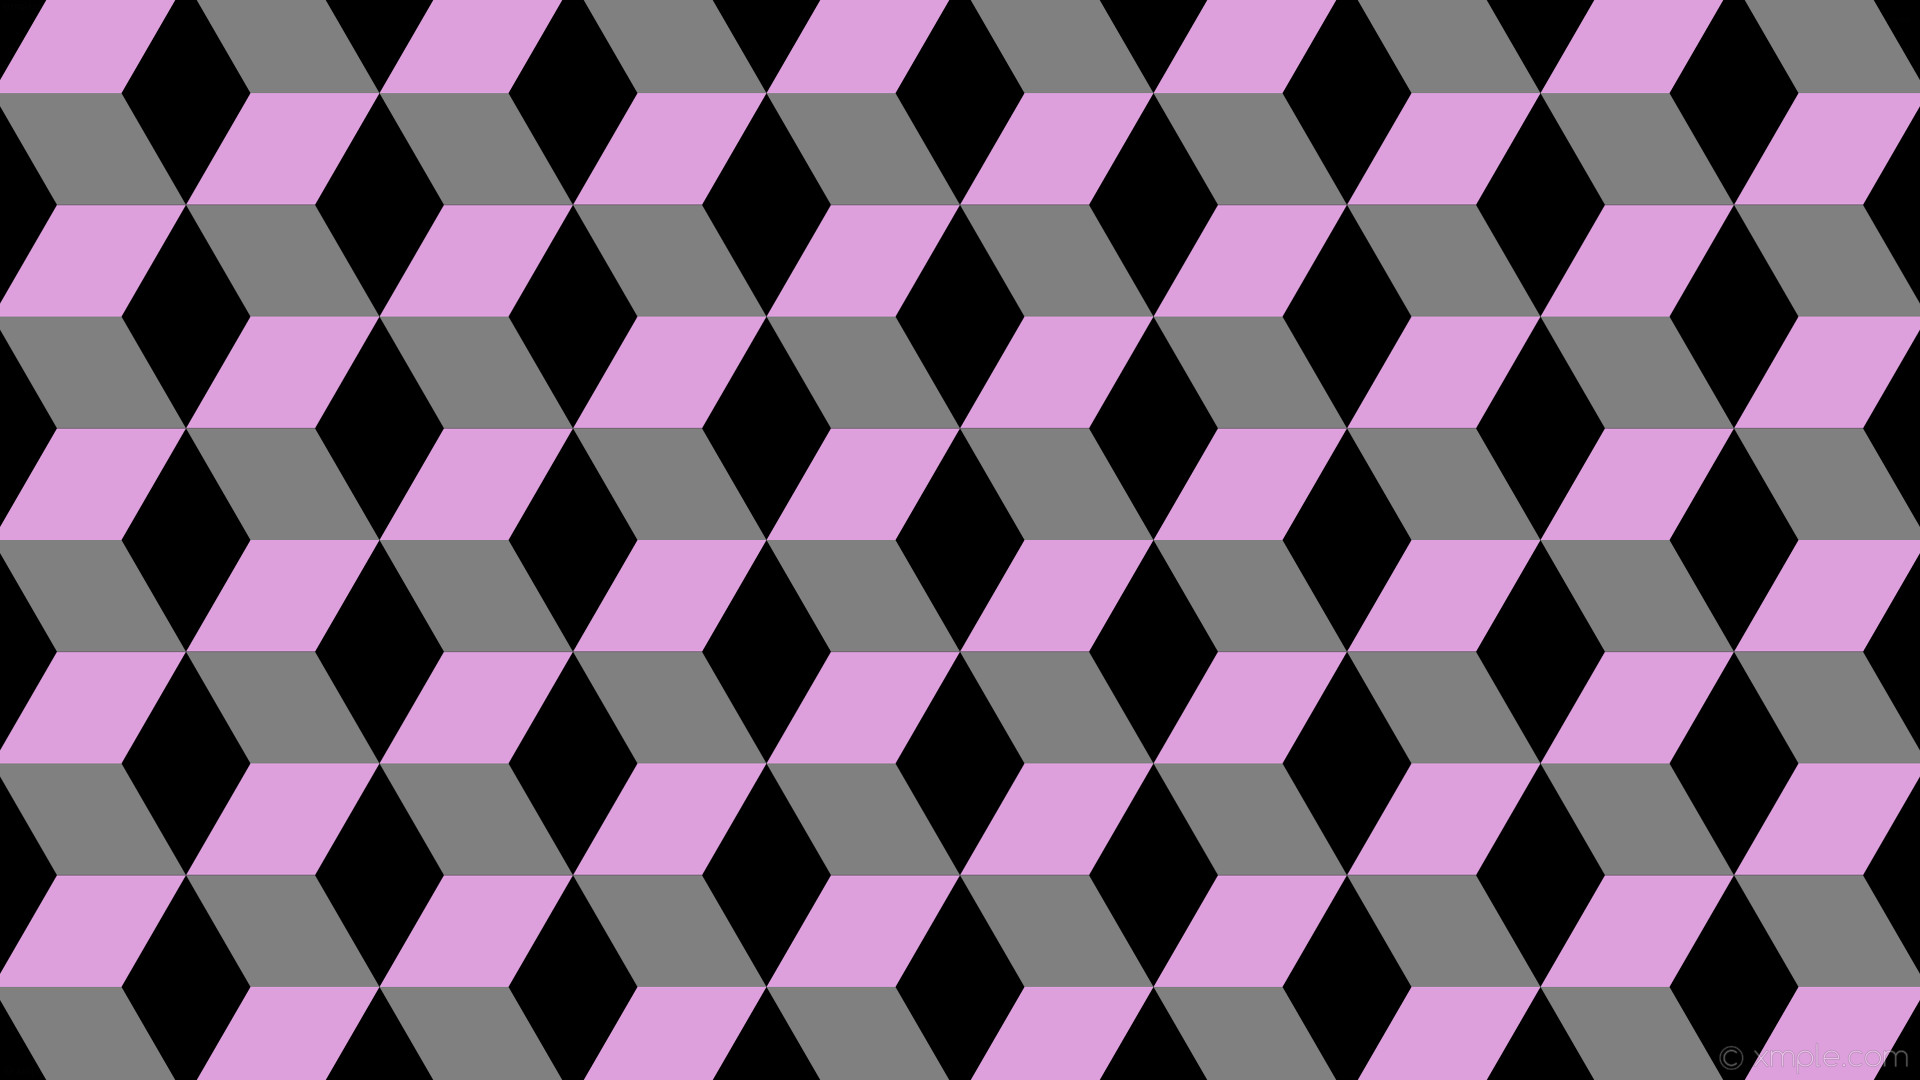 1920x1080 wallpaper purple 3d cubes grey black plum gray #000000 #dda0dd #808080 270Â°